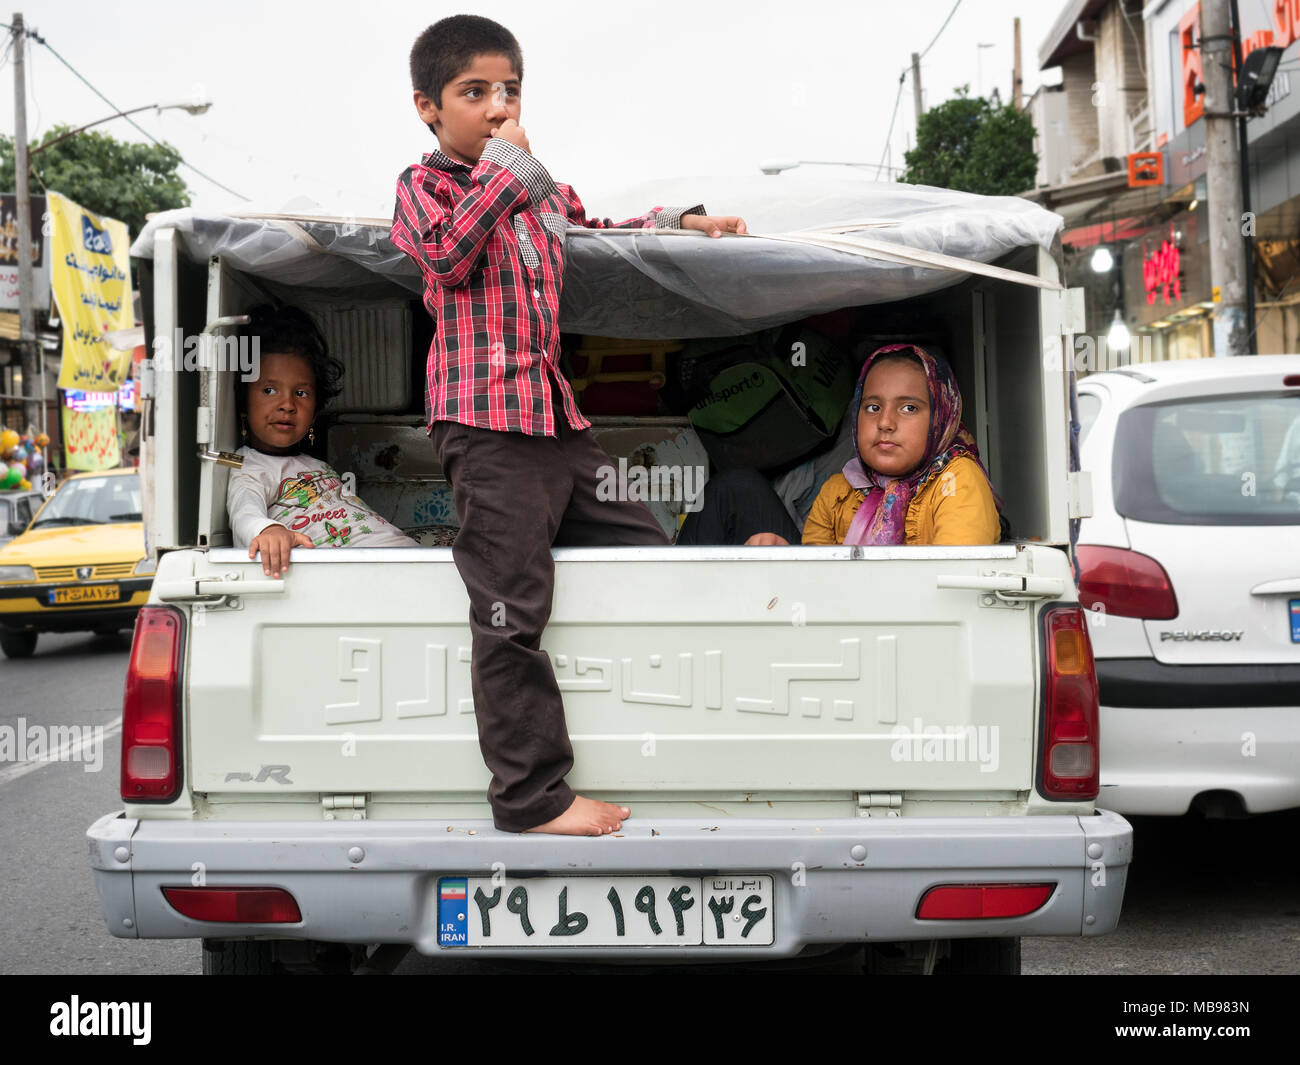 Children riding on the back of a pick-up truck in city traffic. Babolsar, Mazandaran province, Iran Stock Photo